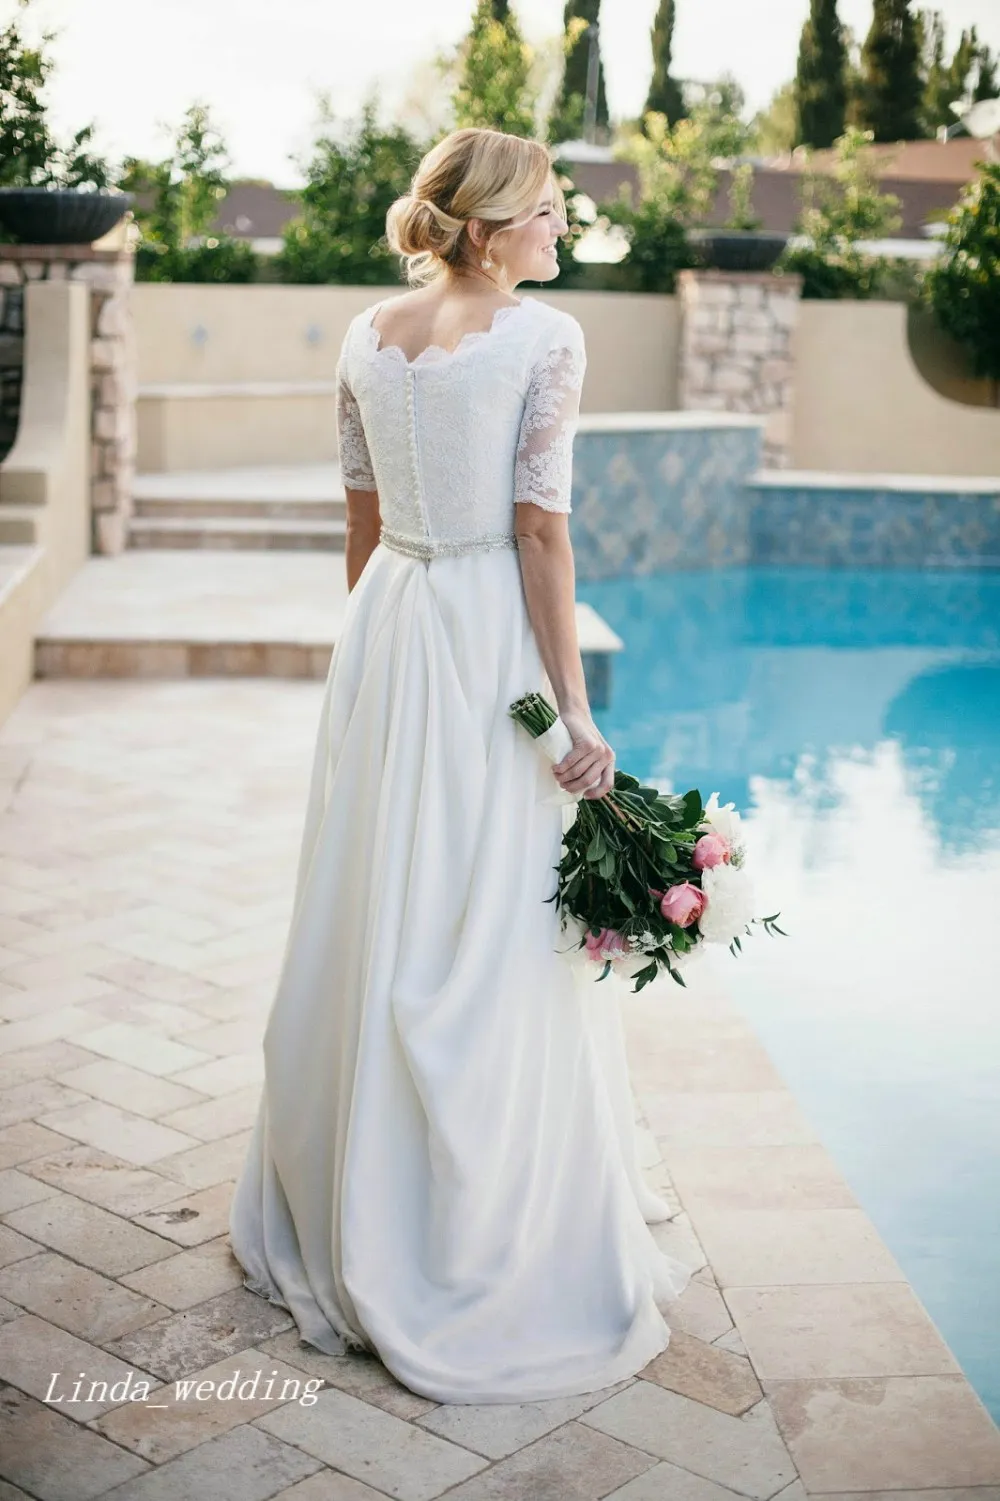 Elegant White Wedding Dresses High Quality Half Sleeves Chiffon Lace Long Women Wear Bridal Party Gowns Plus Size6166041